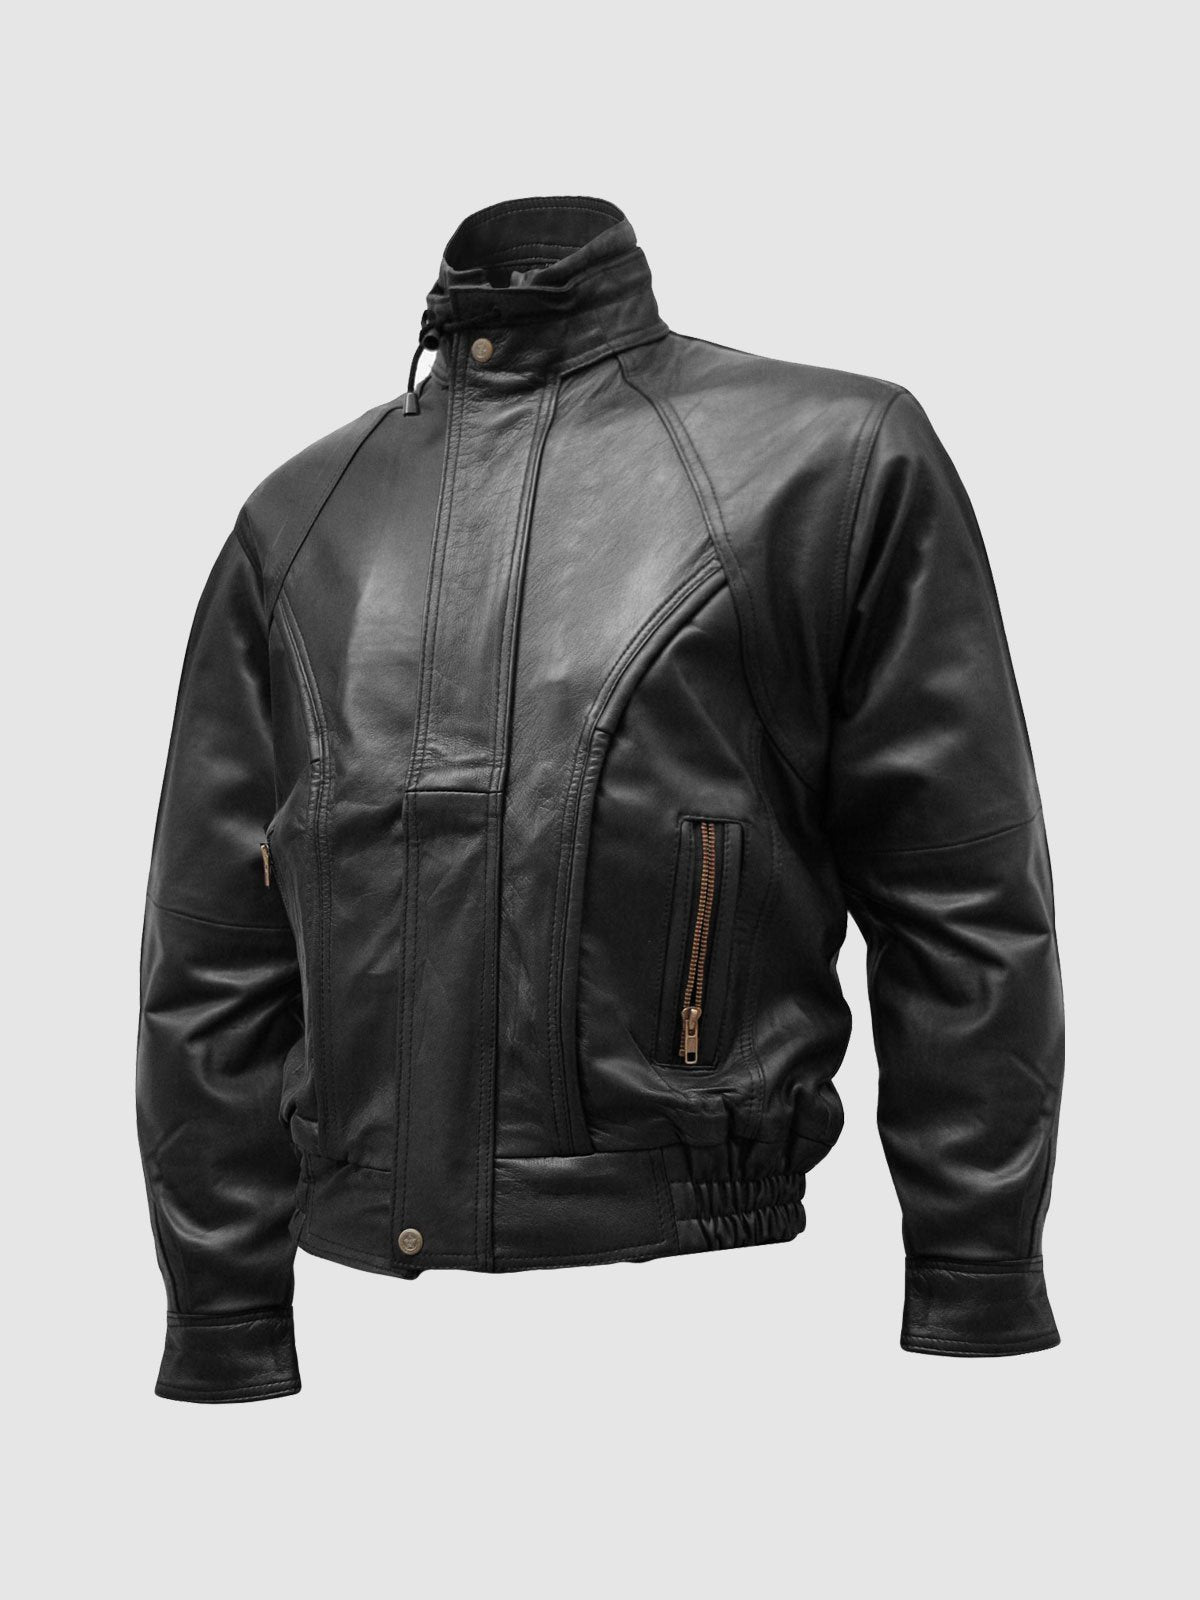 Size Medium Vintage Leather Bomber Jacket For Men Leather Jacket Master 